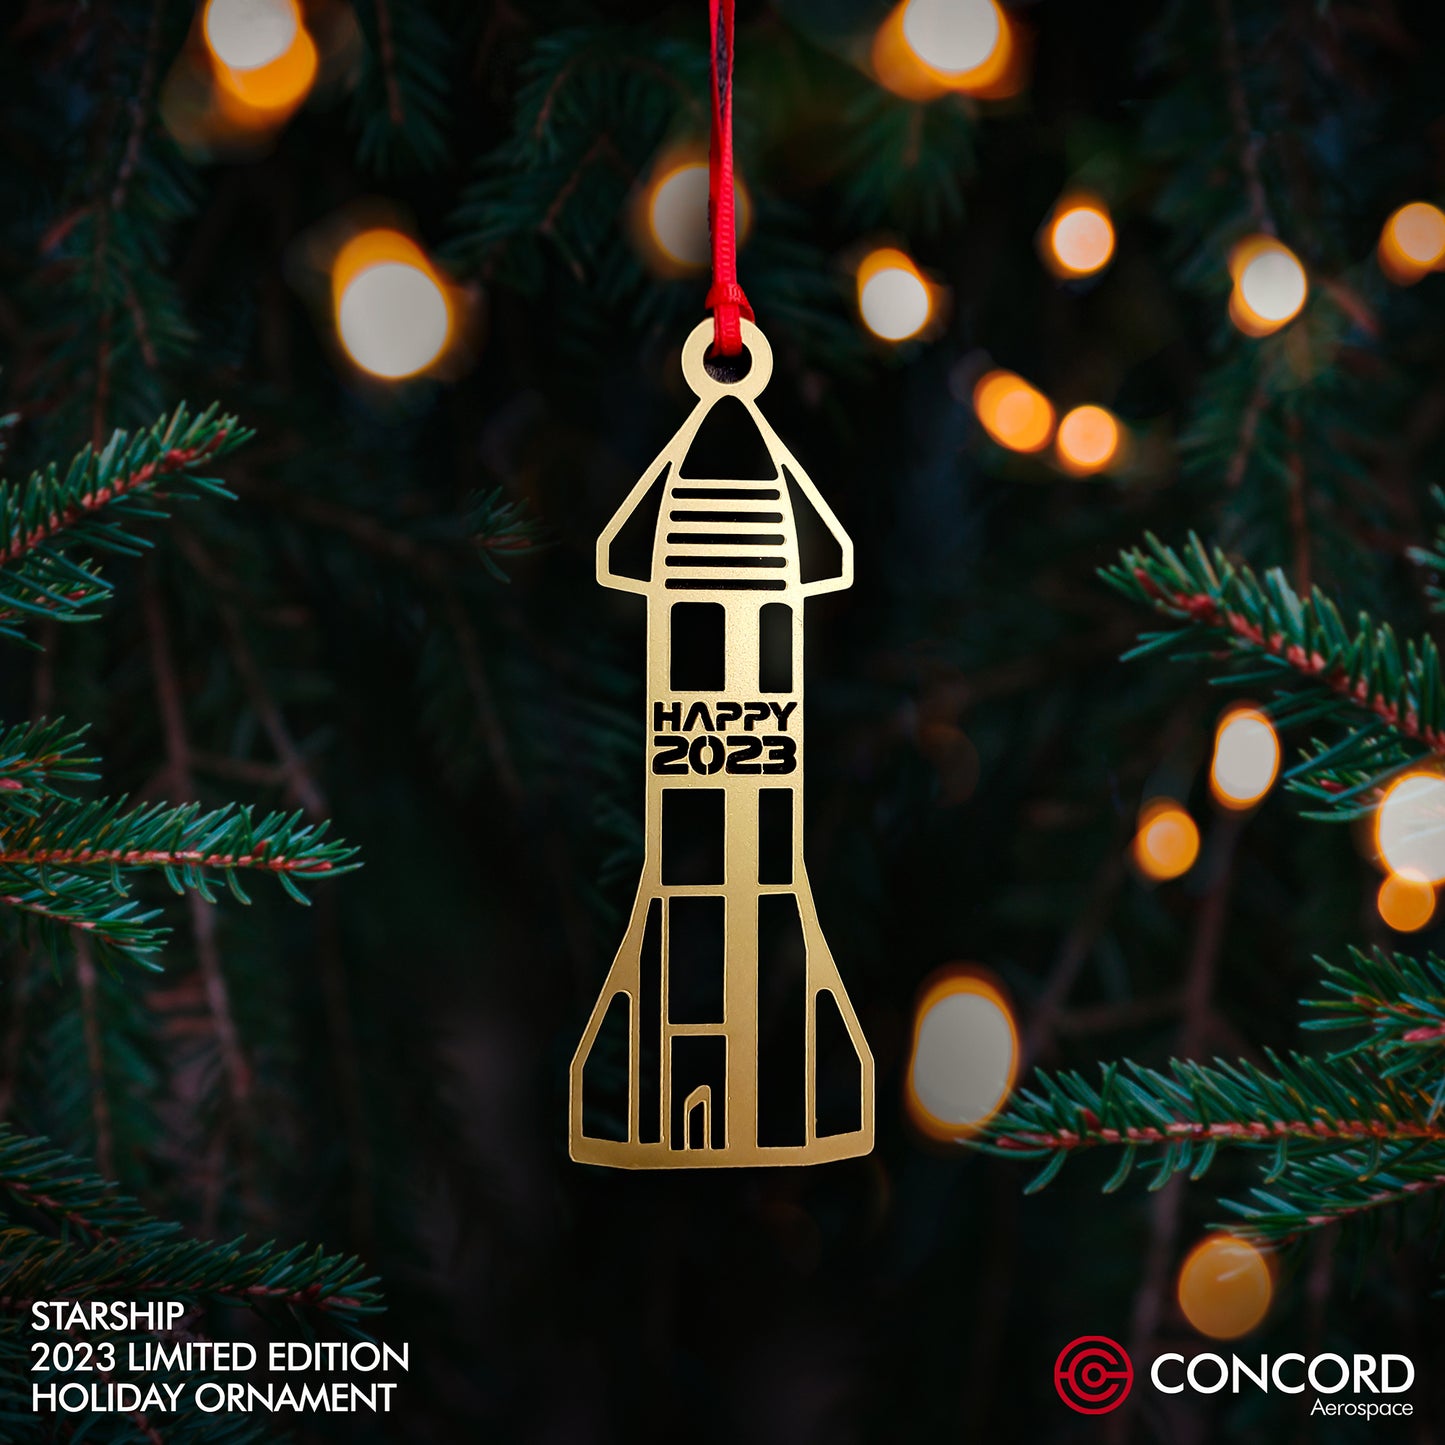 STARSHIP 2023 LIMITED EDITION TREE ORNAMENT - Concord Aerospace Concord Aerospace Concord Aerospace Holiday Ornament